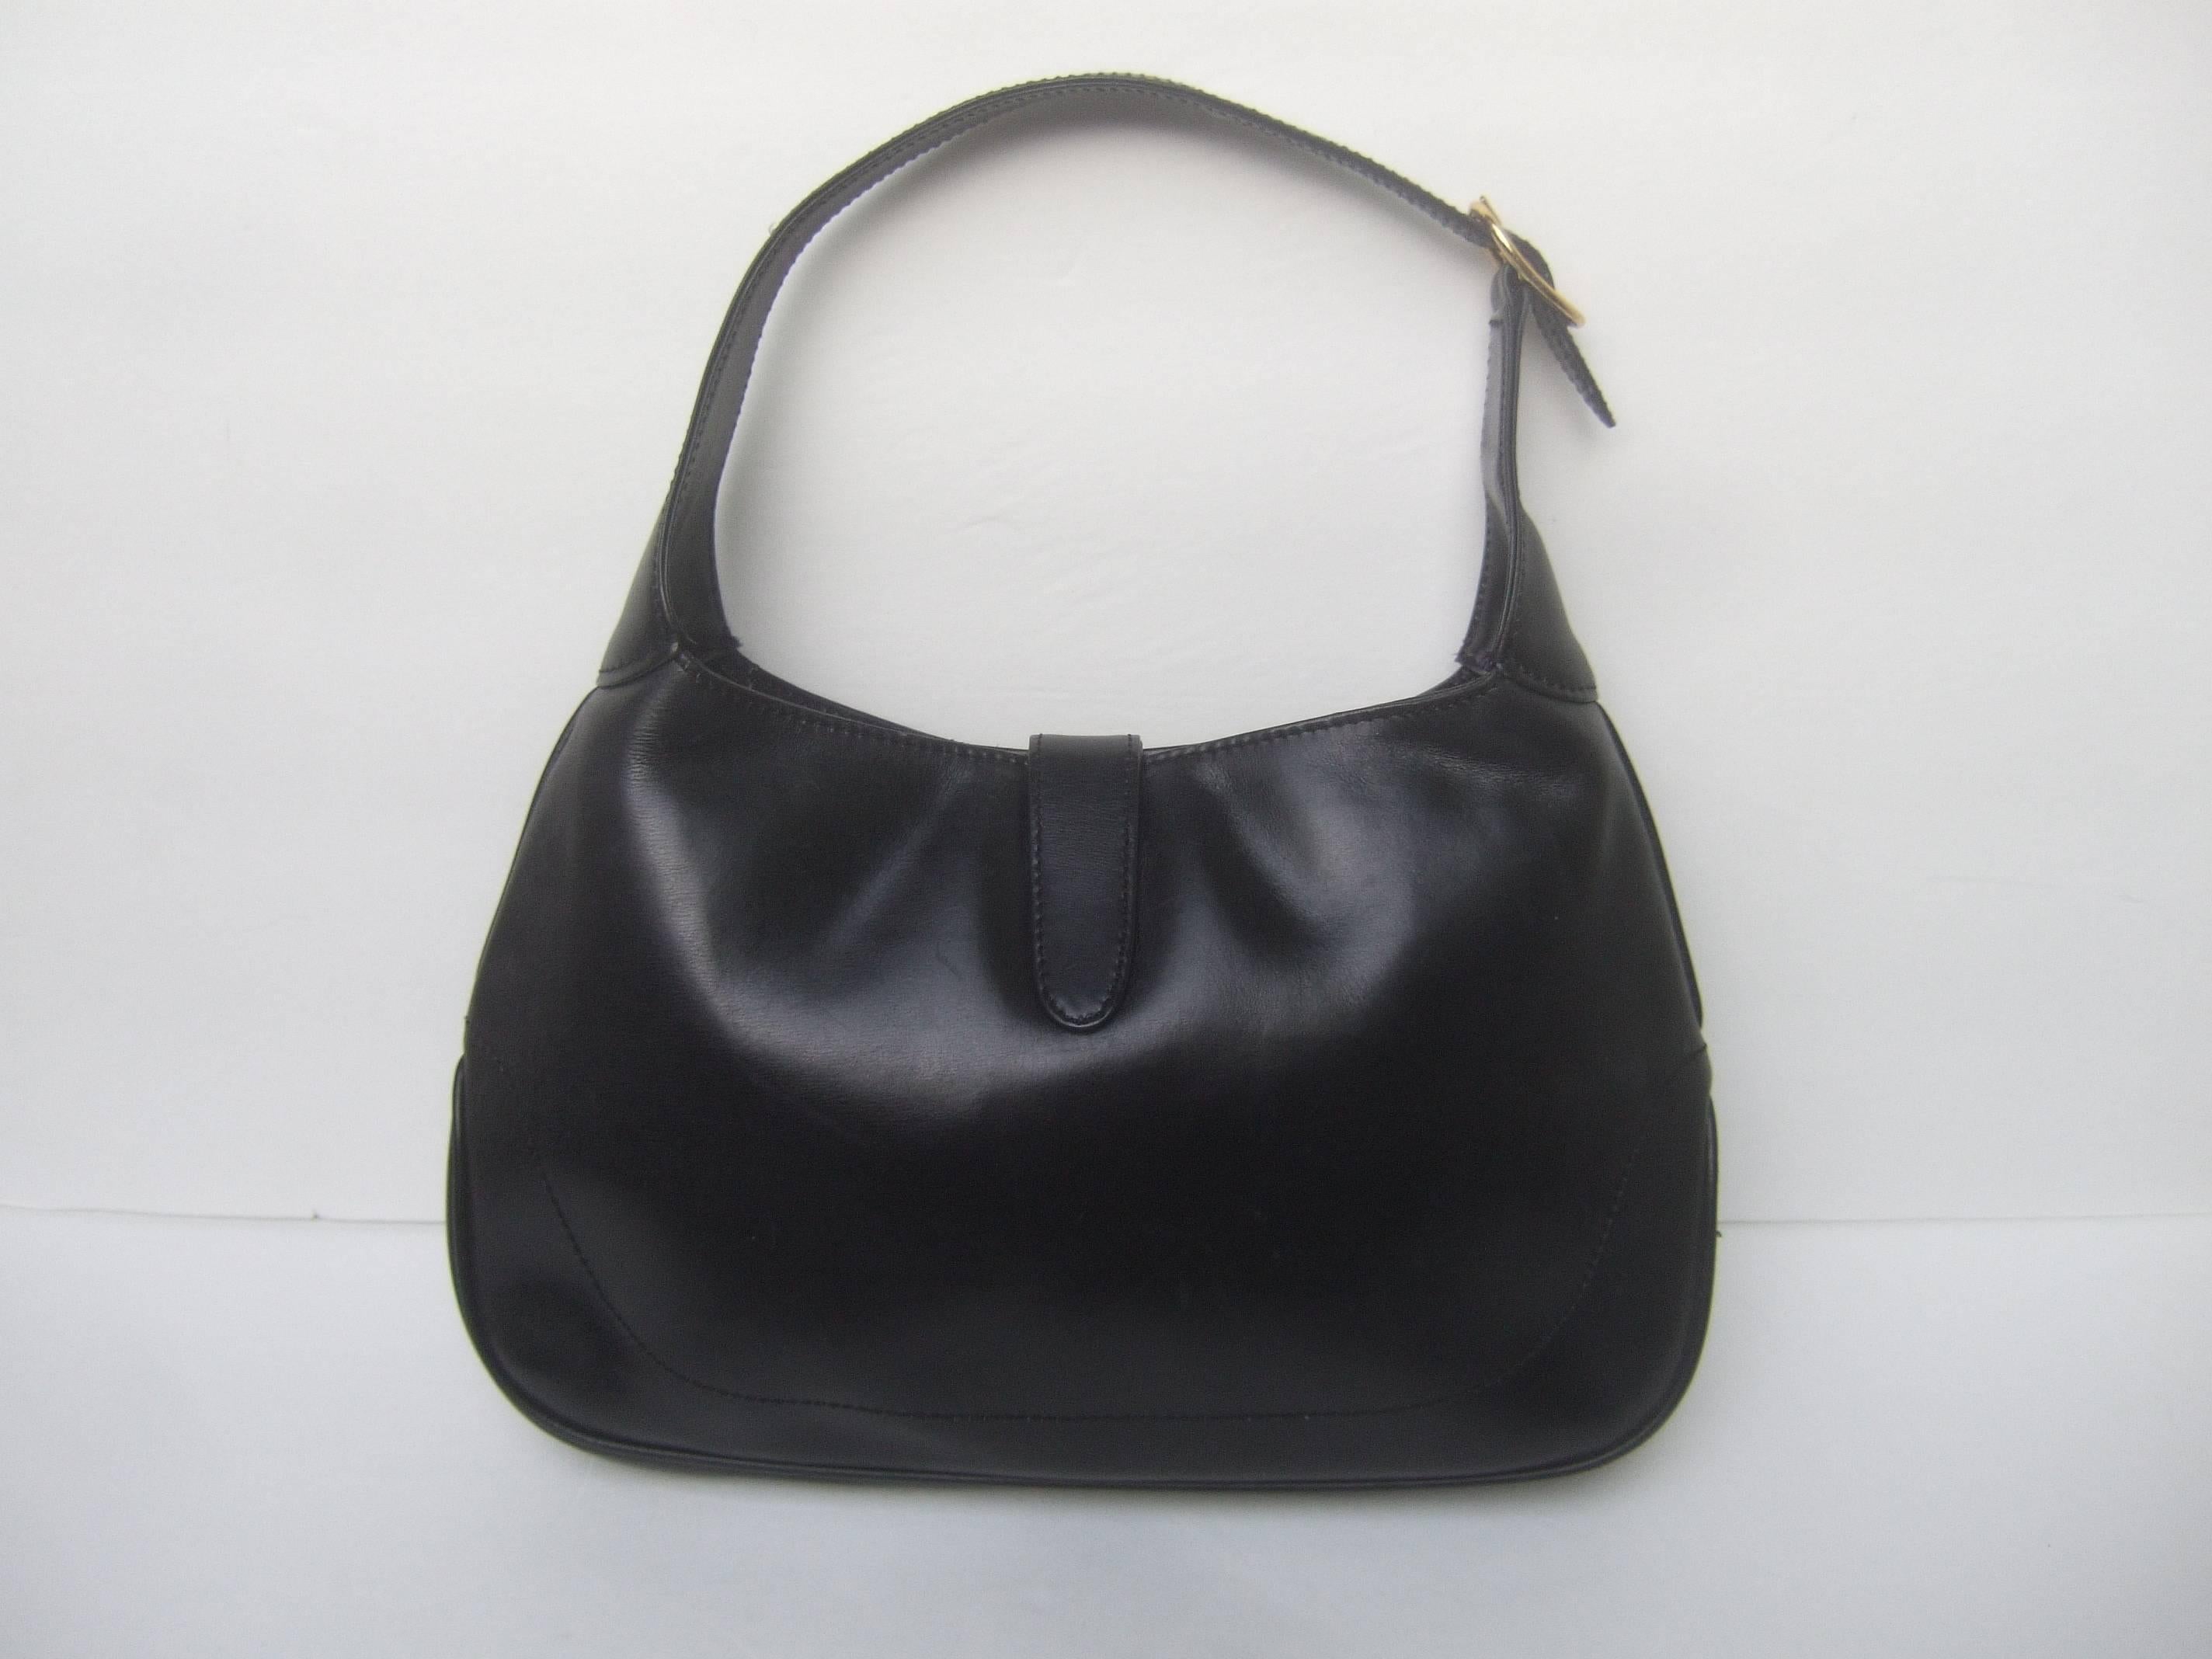 Gucci Italy Iconic Ebony Leather Jackie O Piston Handbag c 1970s 4